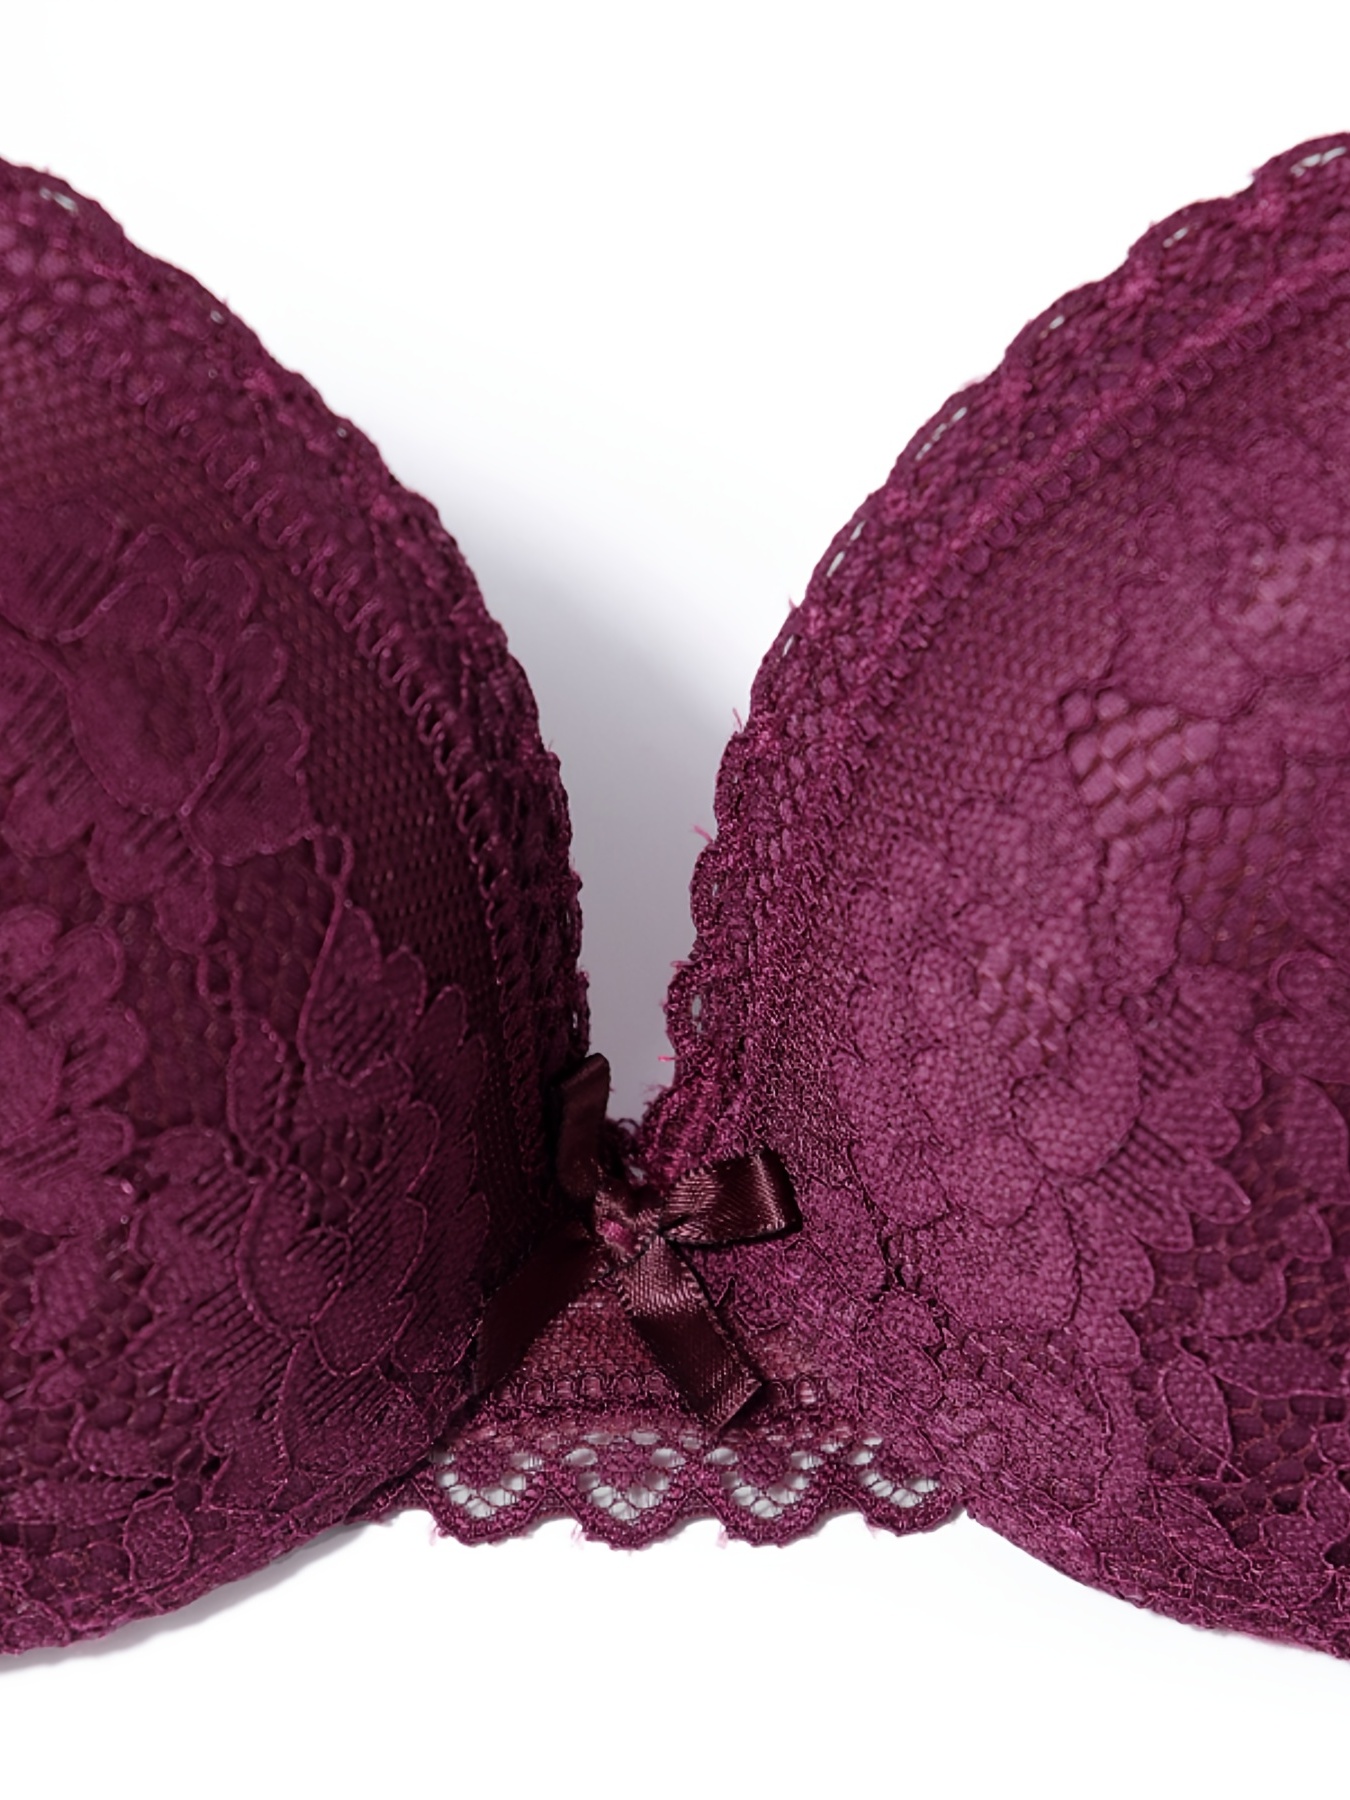 Victoria's Secret, Intimates & Sleepwear, Purple Very Sexy Push Up Bra